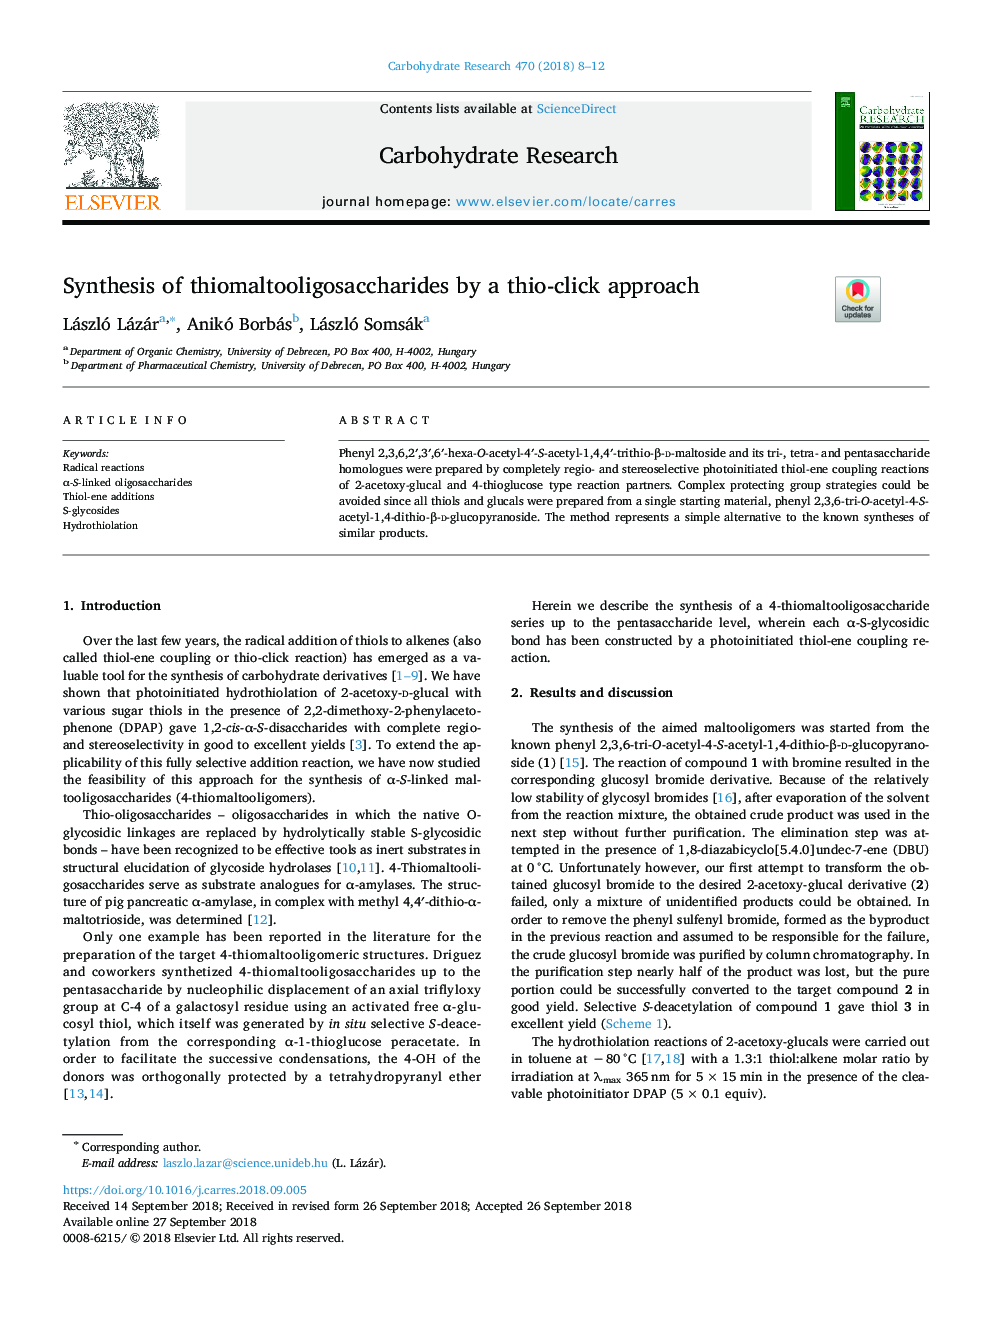 Synthesis of thiomaltooligosaccharides by a thio-click approach